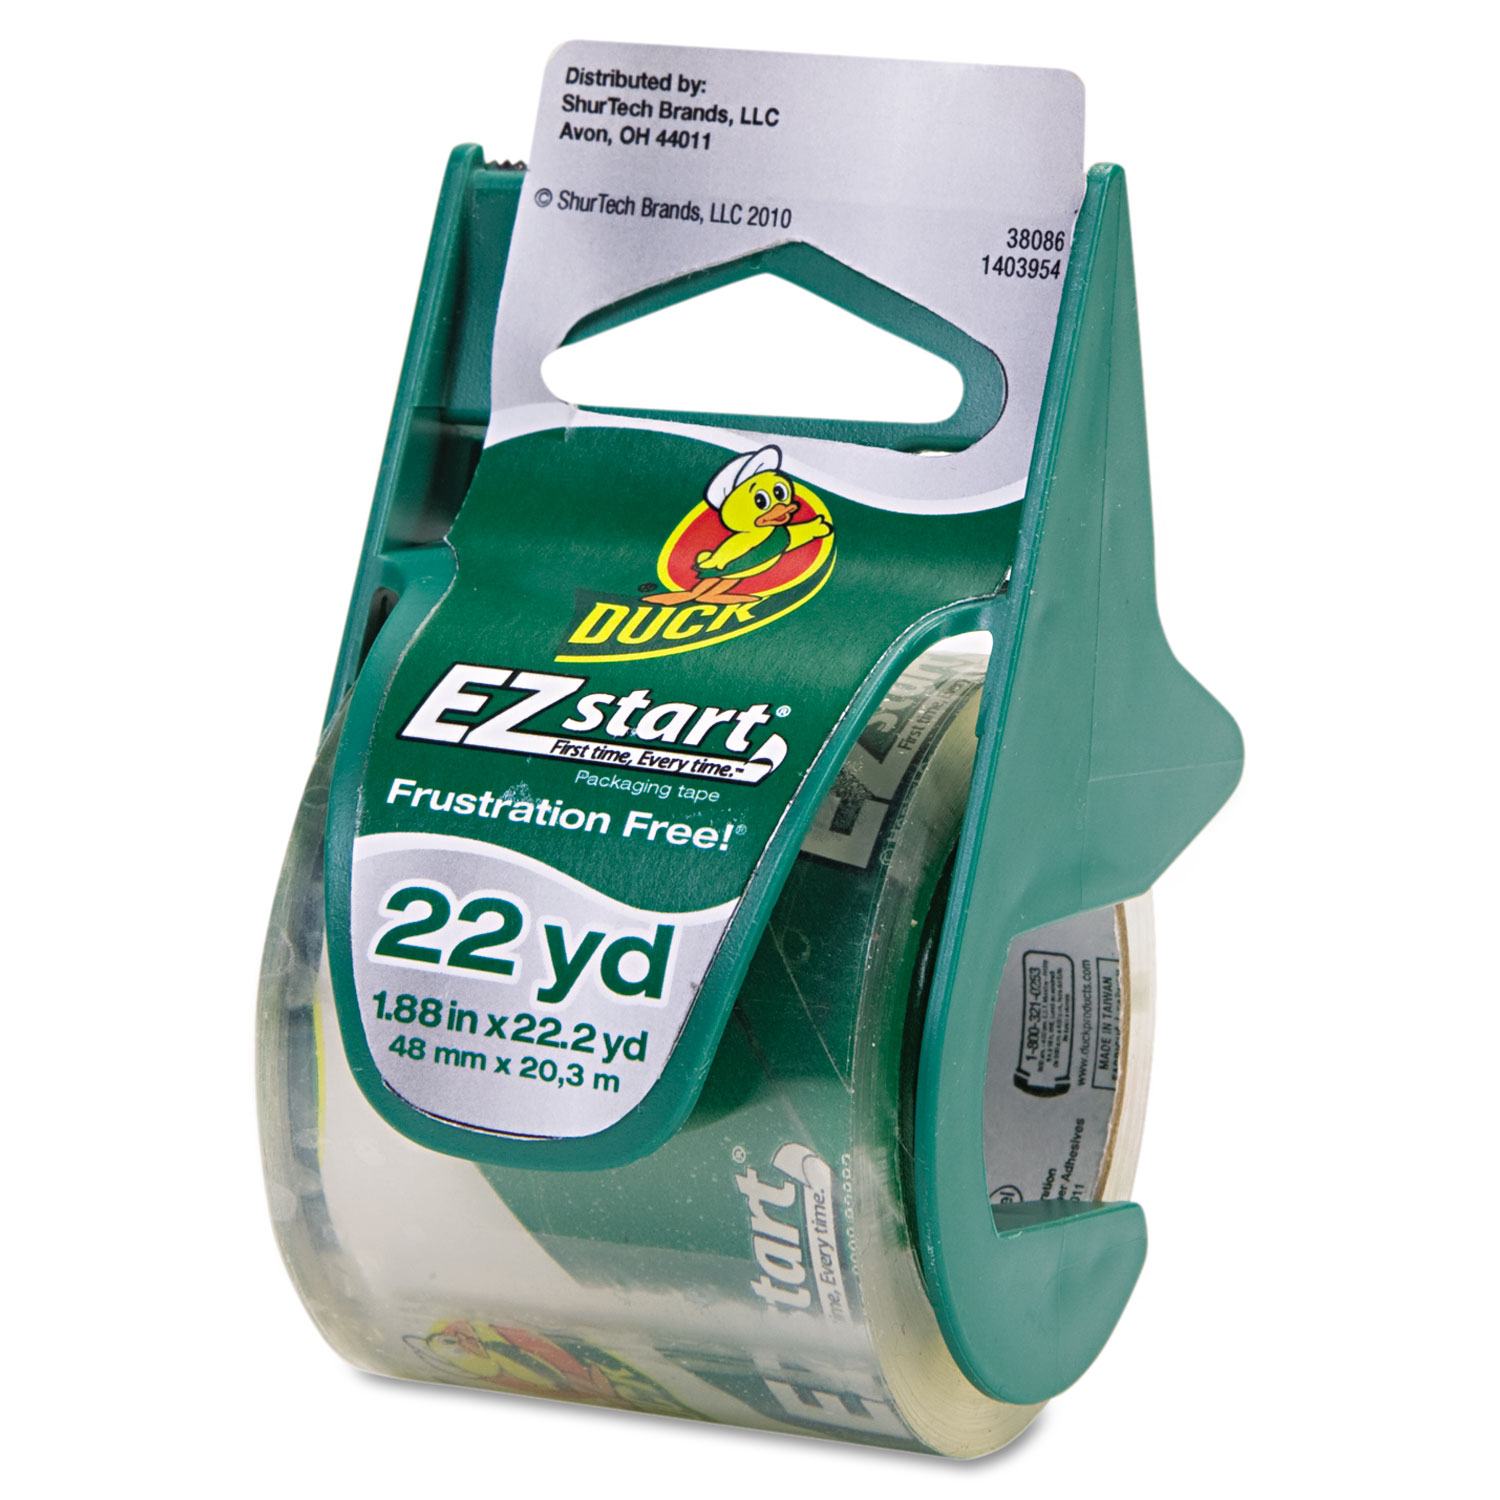 EZ Start Carton Sealing Tape/Dispenser, 1.88 x 22.2yds, 1 1/2 Core